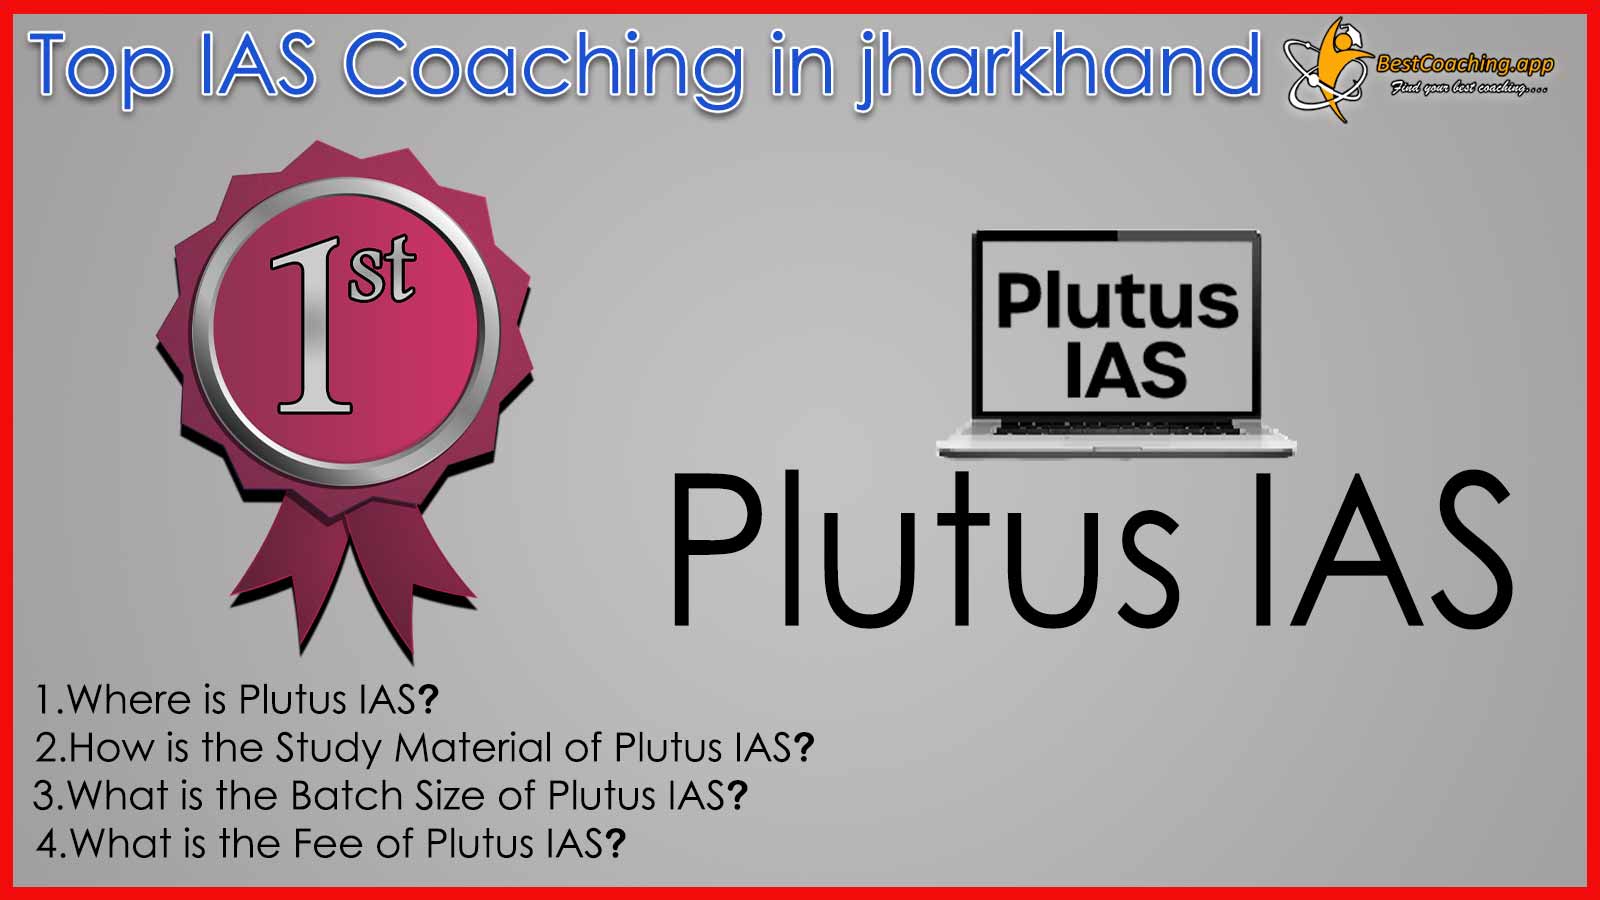 Plutus IAS Online Coaching